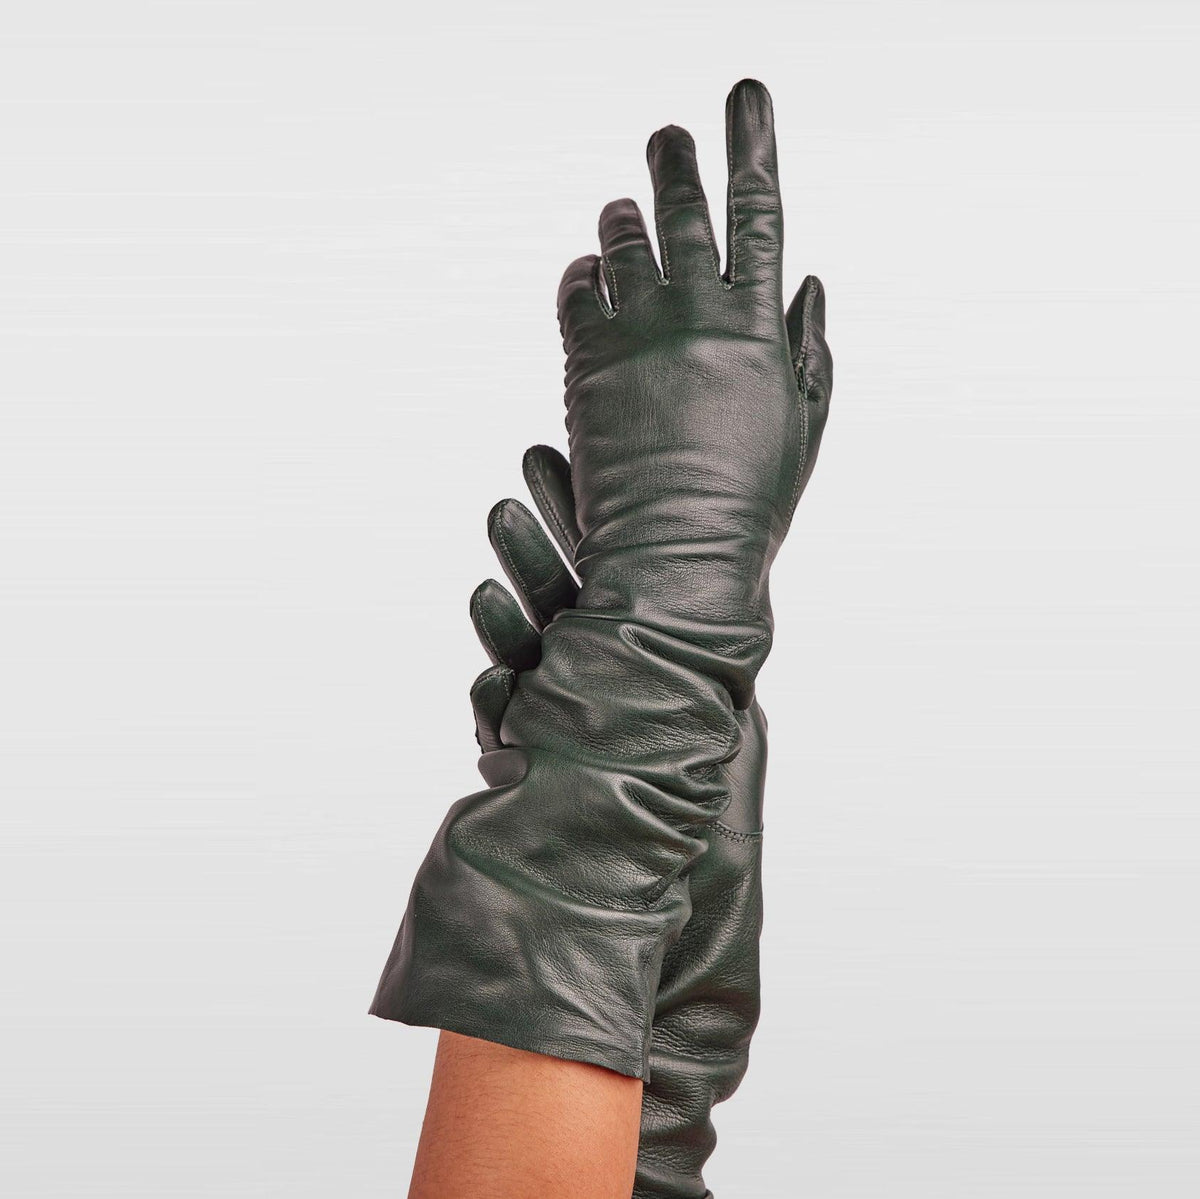 Classic Runway Glove by Seymoure Gloves. Opera gloves.